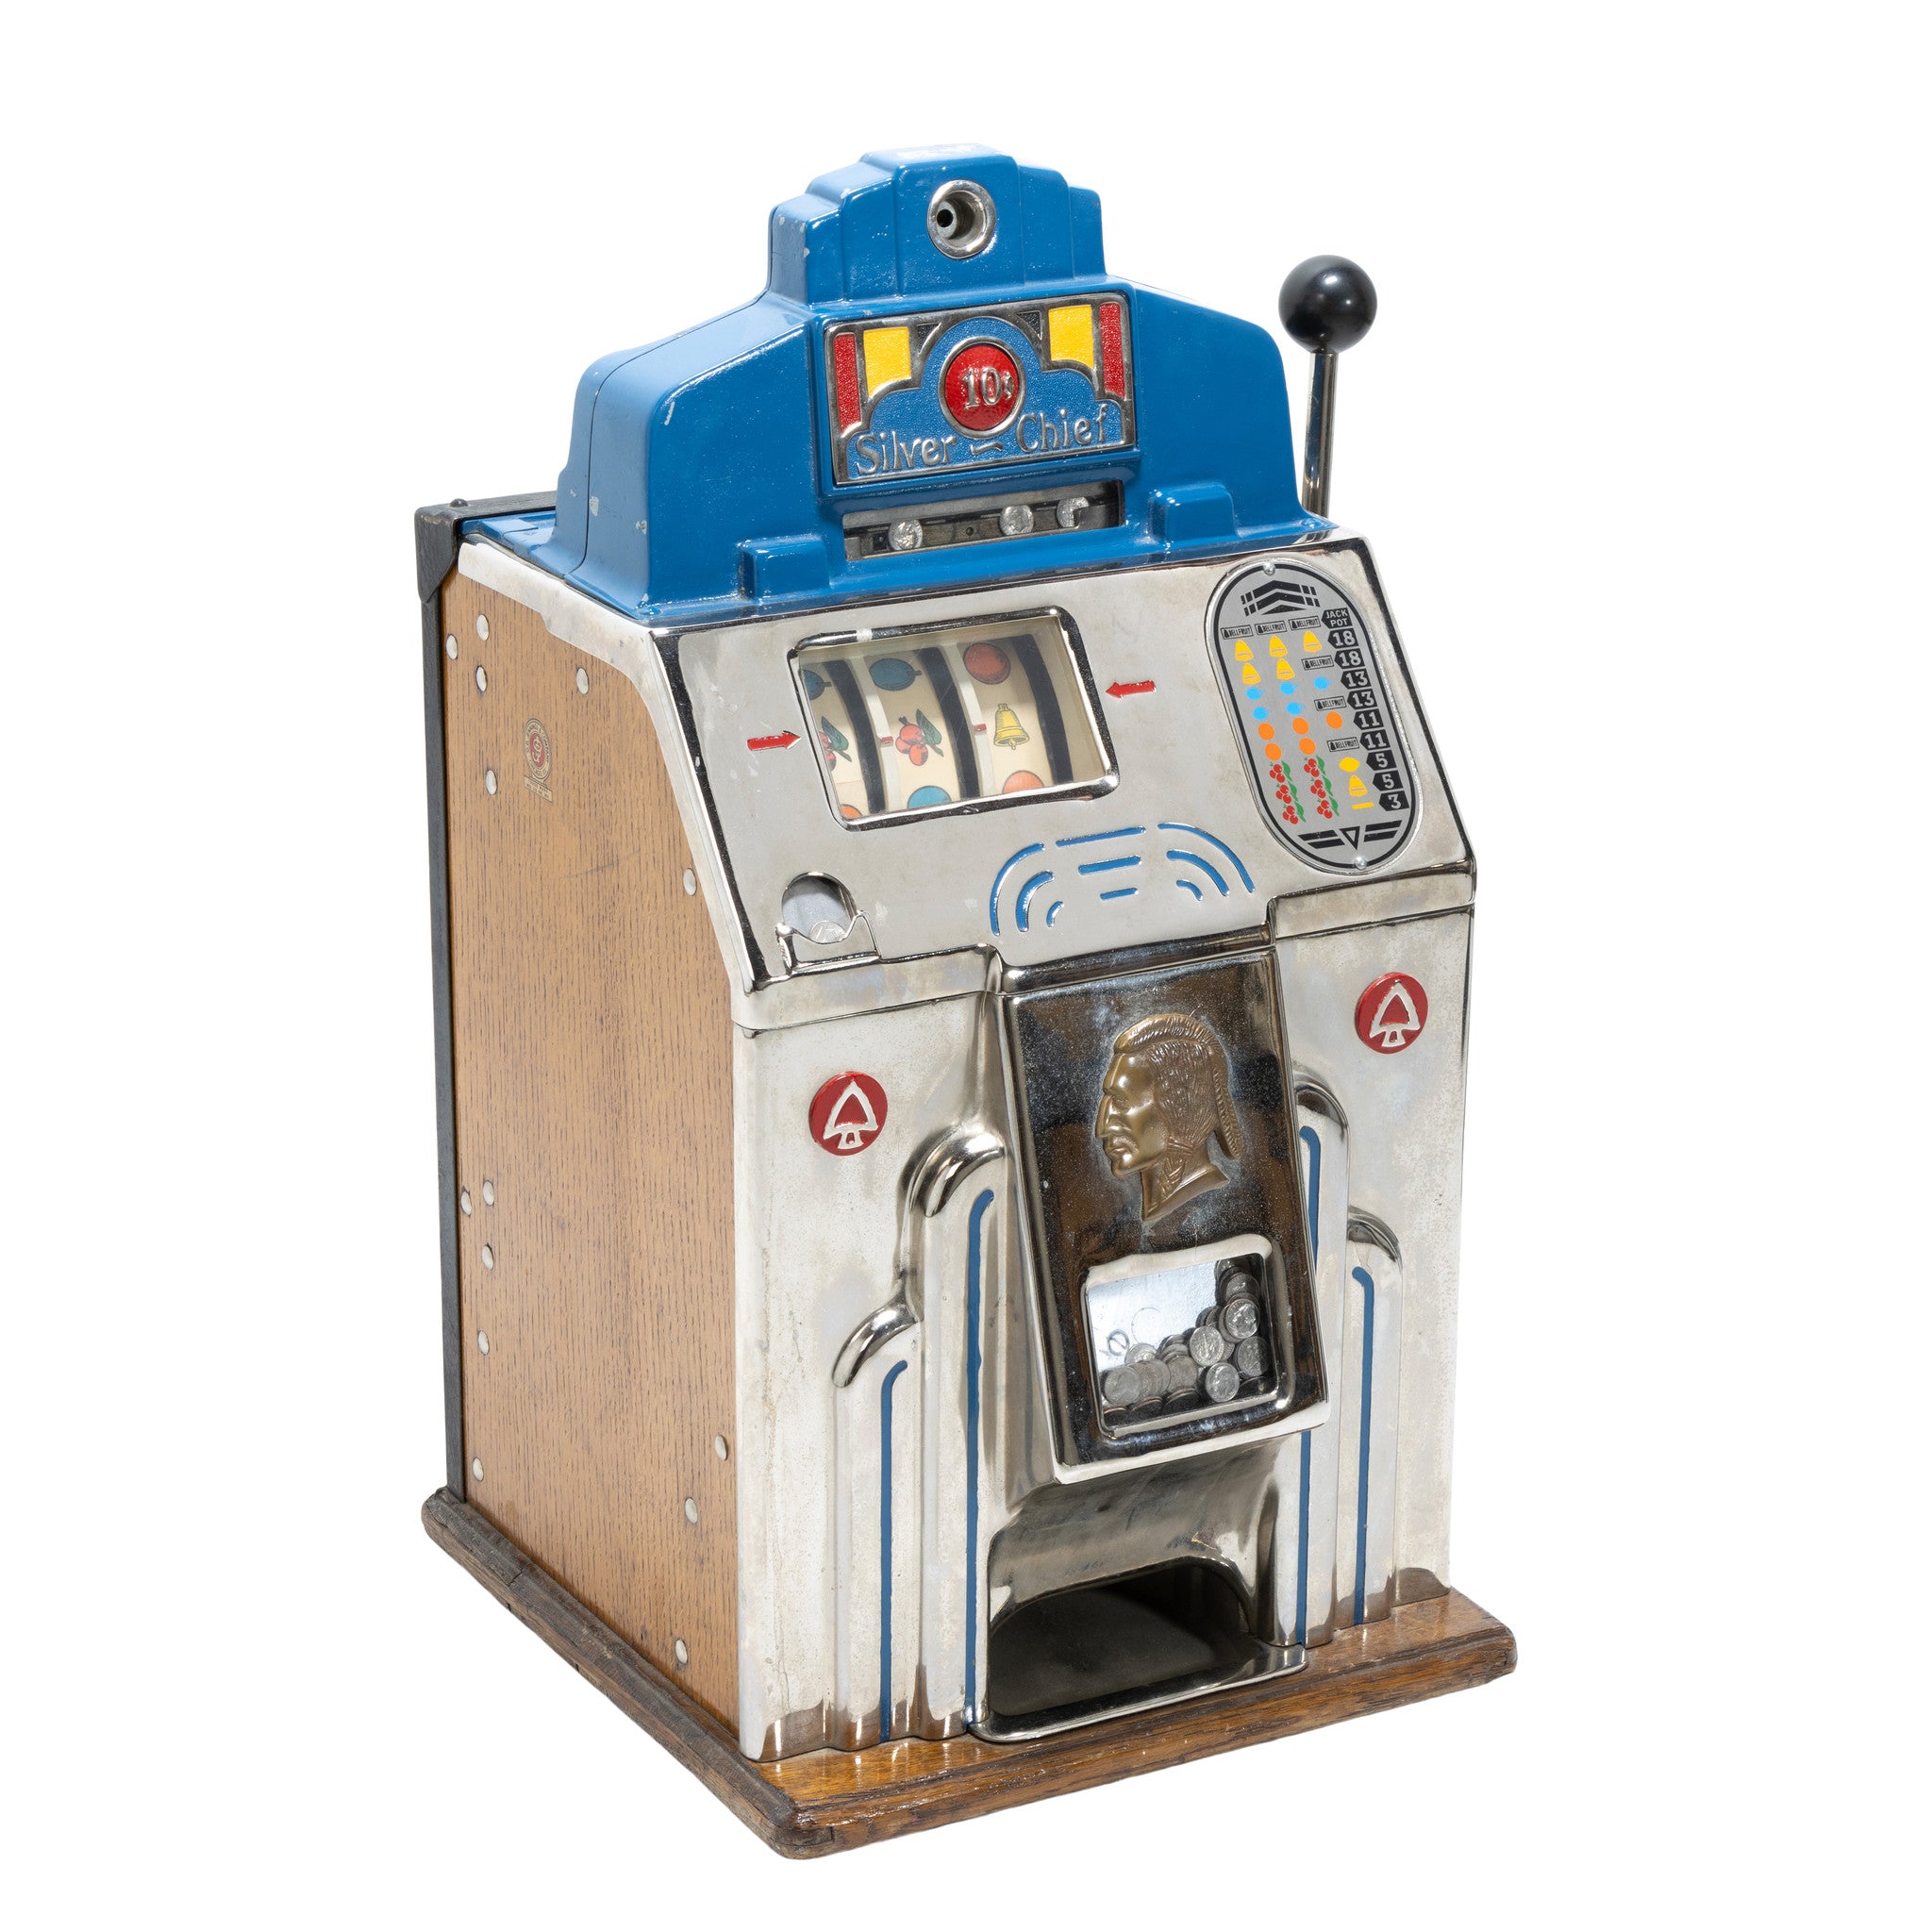 O.D. Jennings Silver Chief Slot Machine